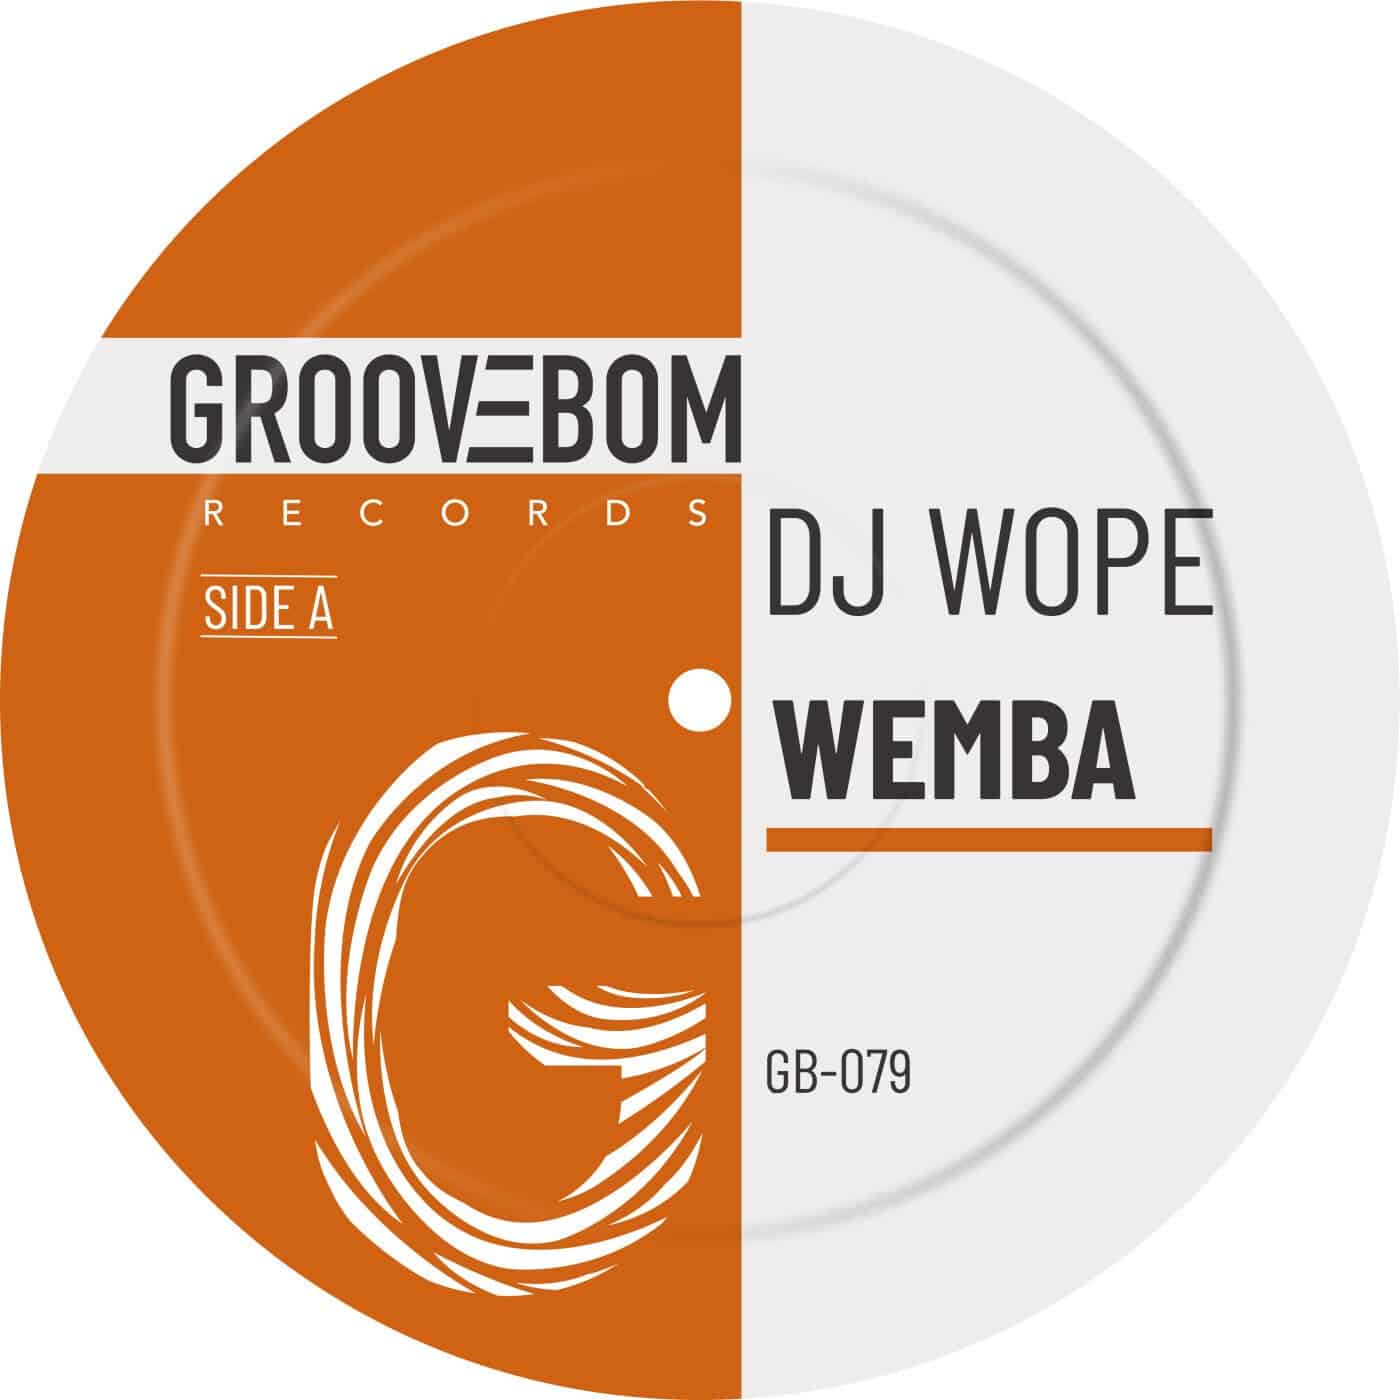 Download DJ Wope - Wemba on Electrobuzz